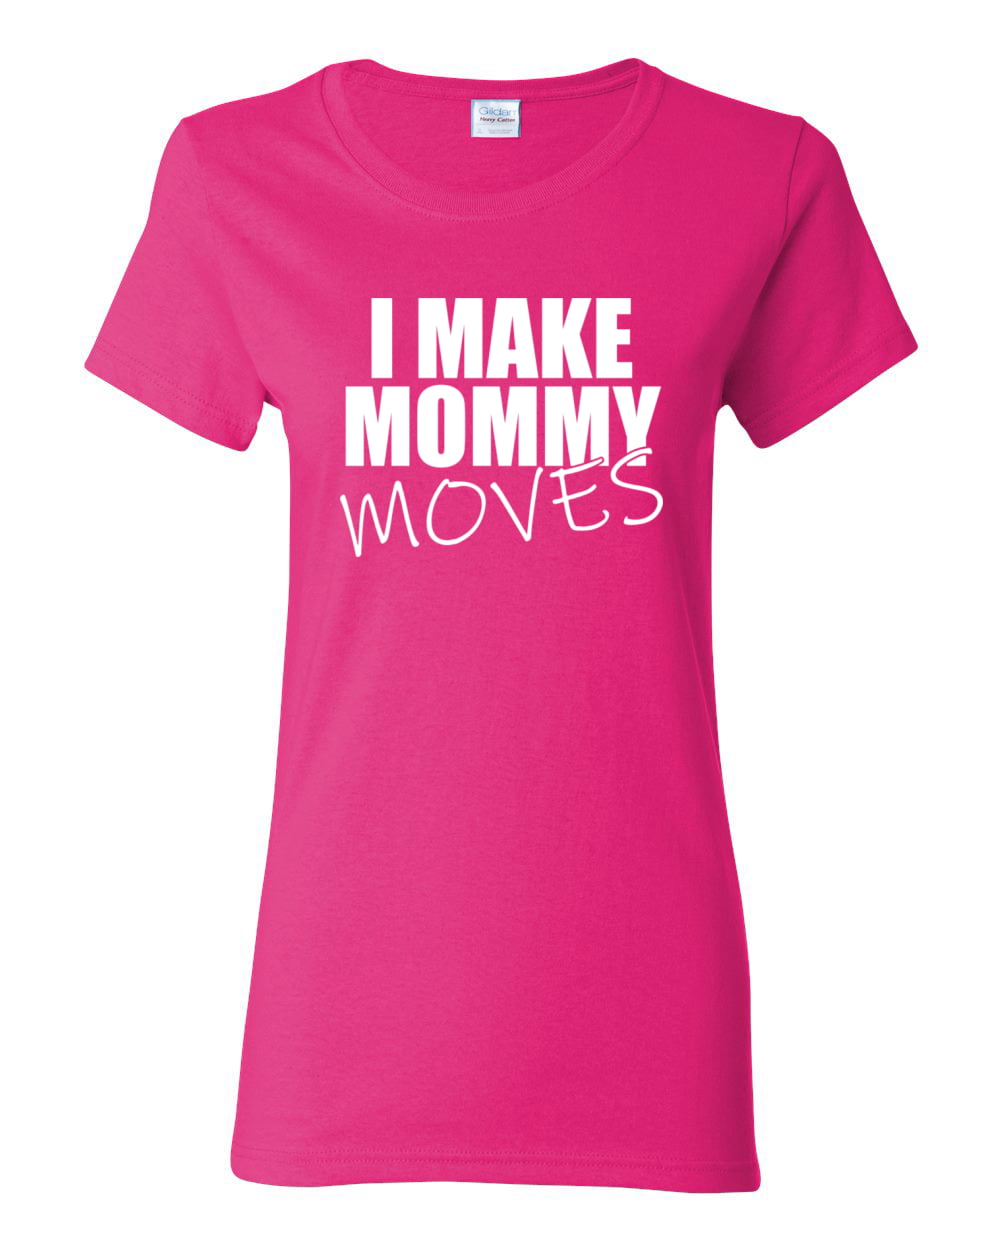 I Make Mommy Moves Shirt Mothers Moms